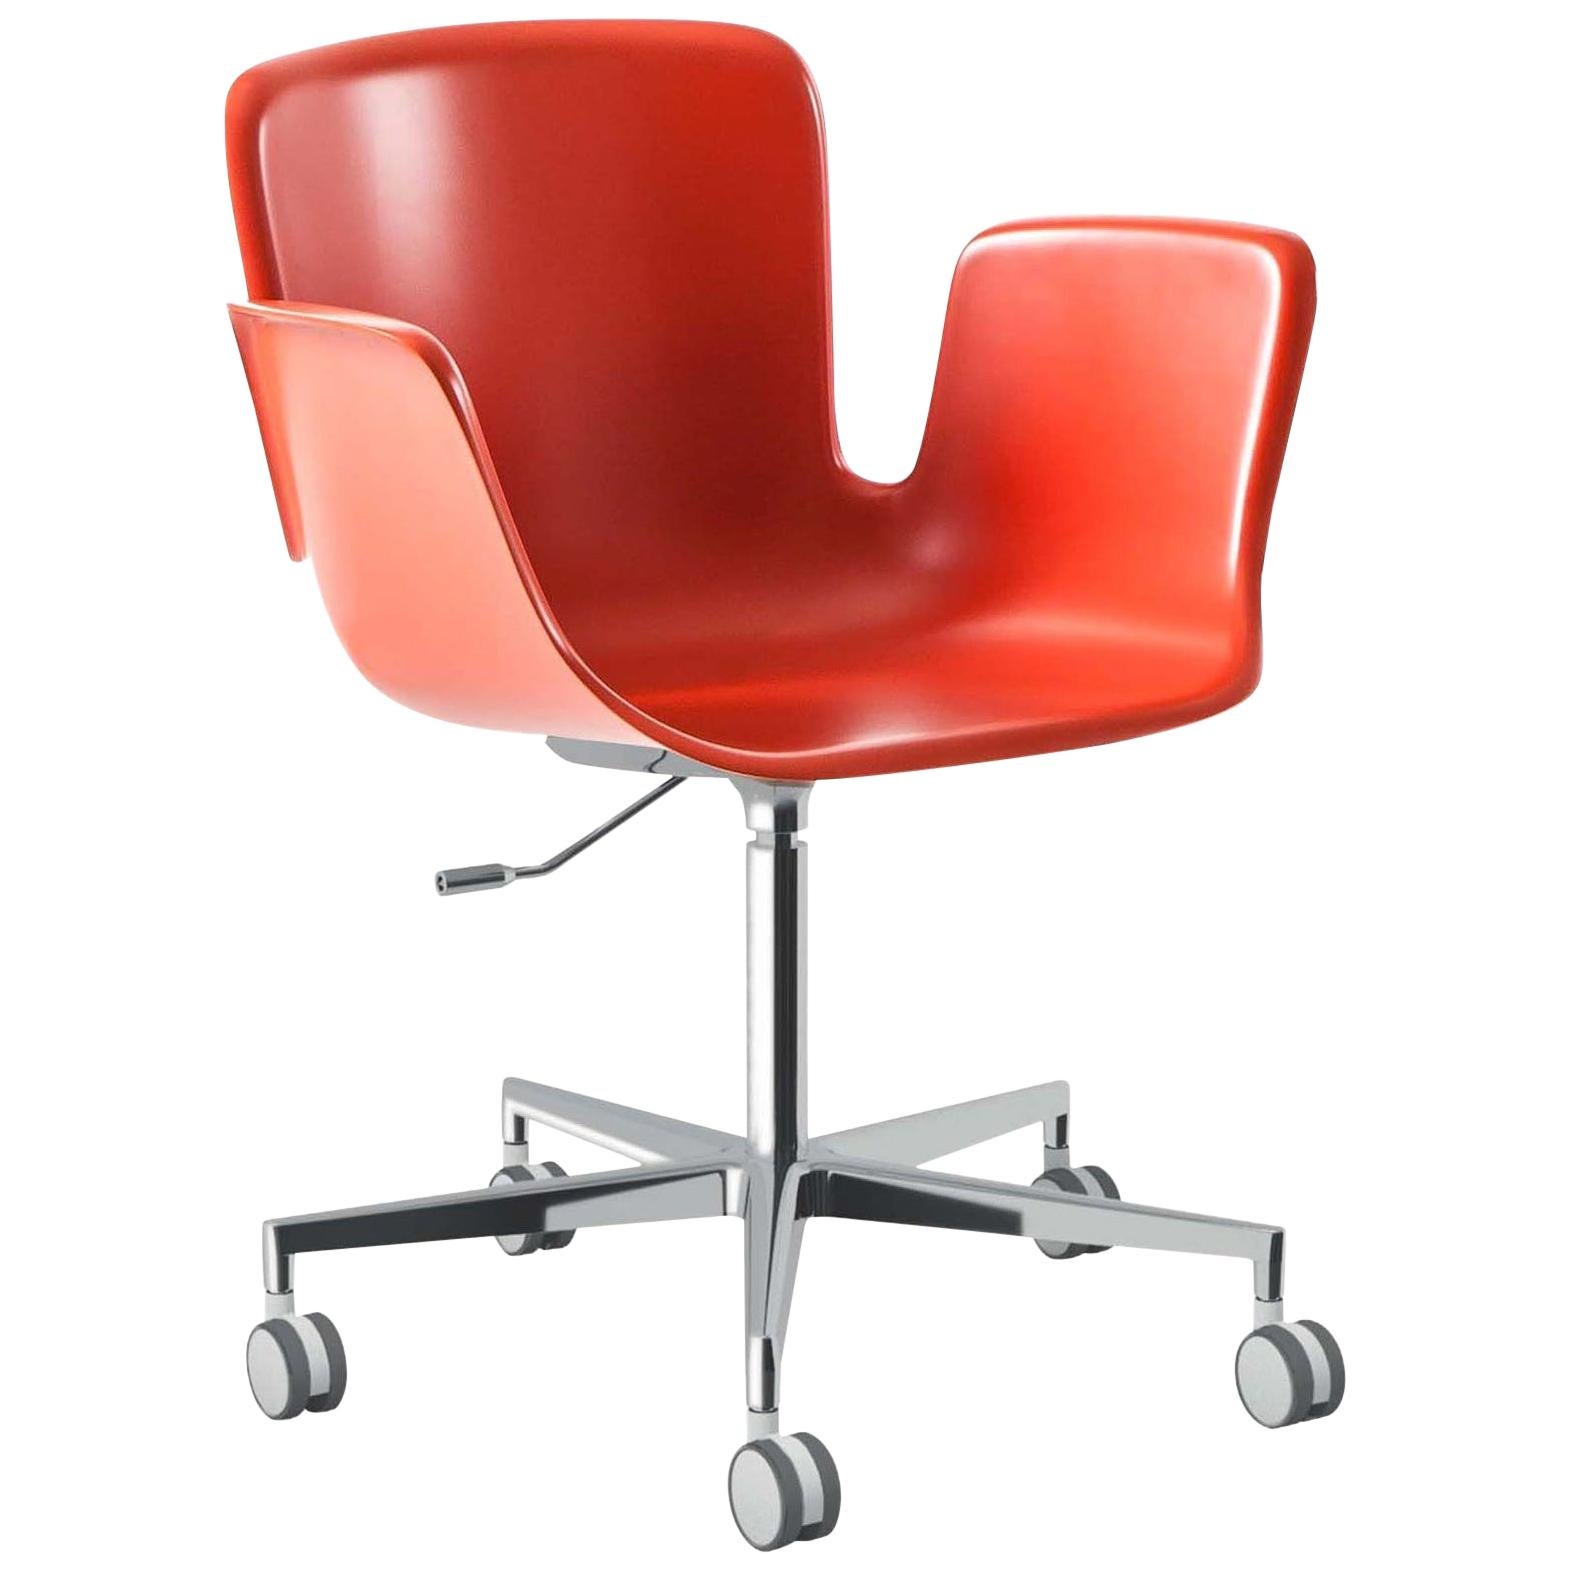 Werner Aisslinger Juli Plastic Chair in Vermillion Seat for Cappellini For Sale